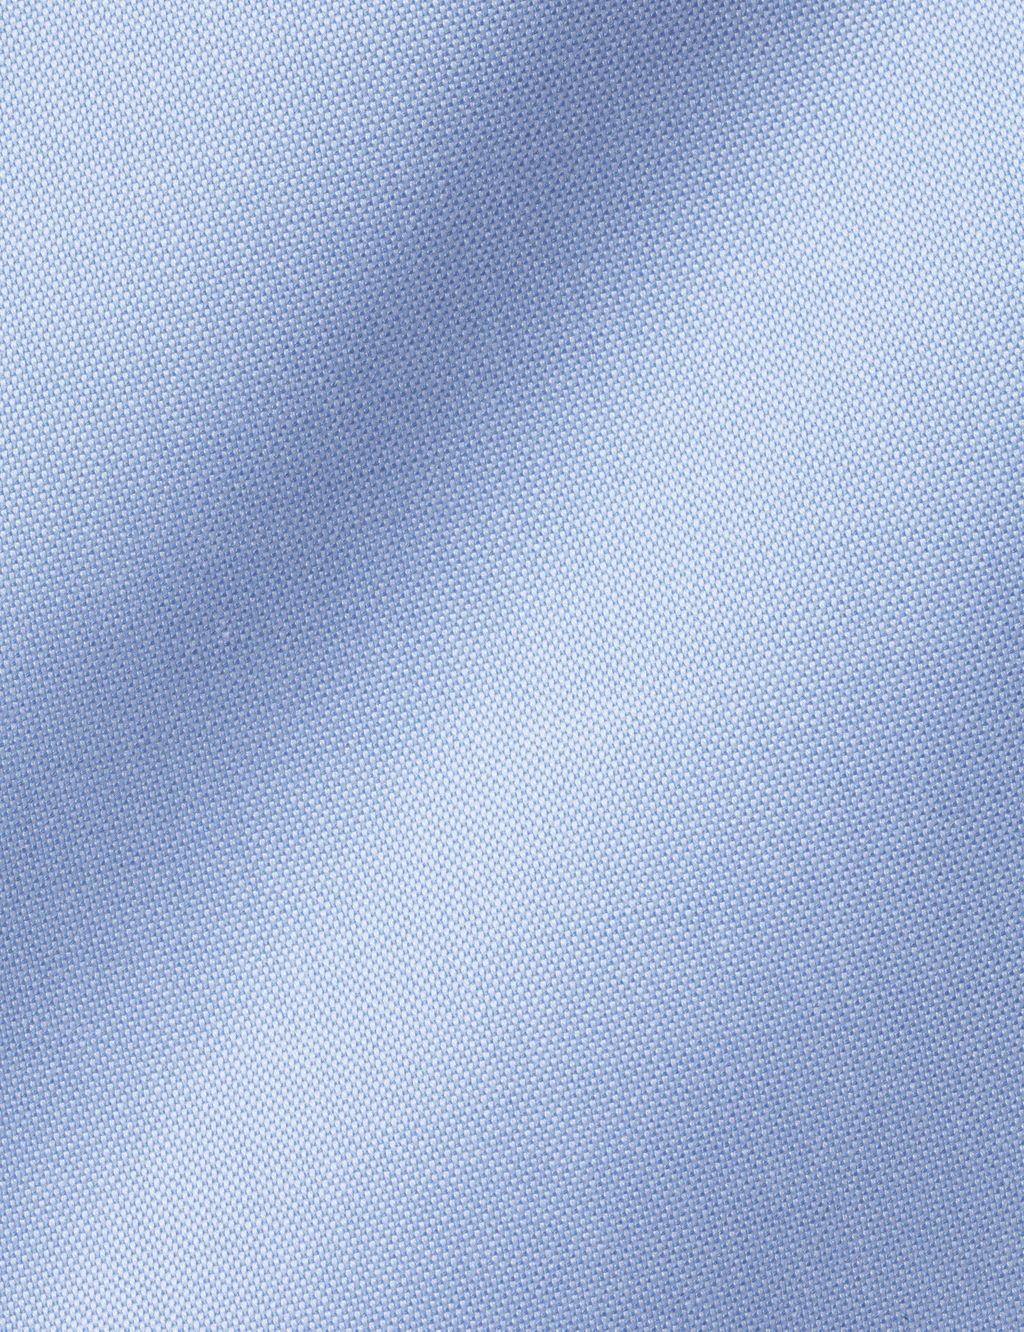 Slim Fit Non Iron Pure Cotton Oxford Shirt image 6